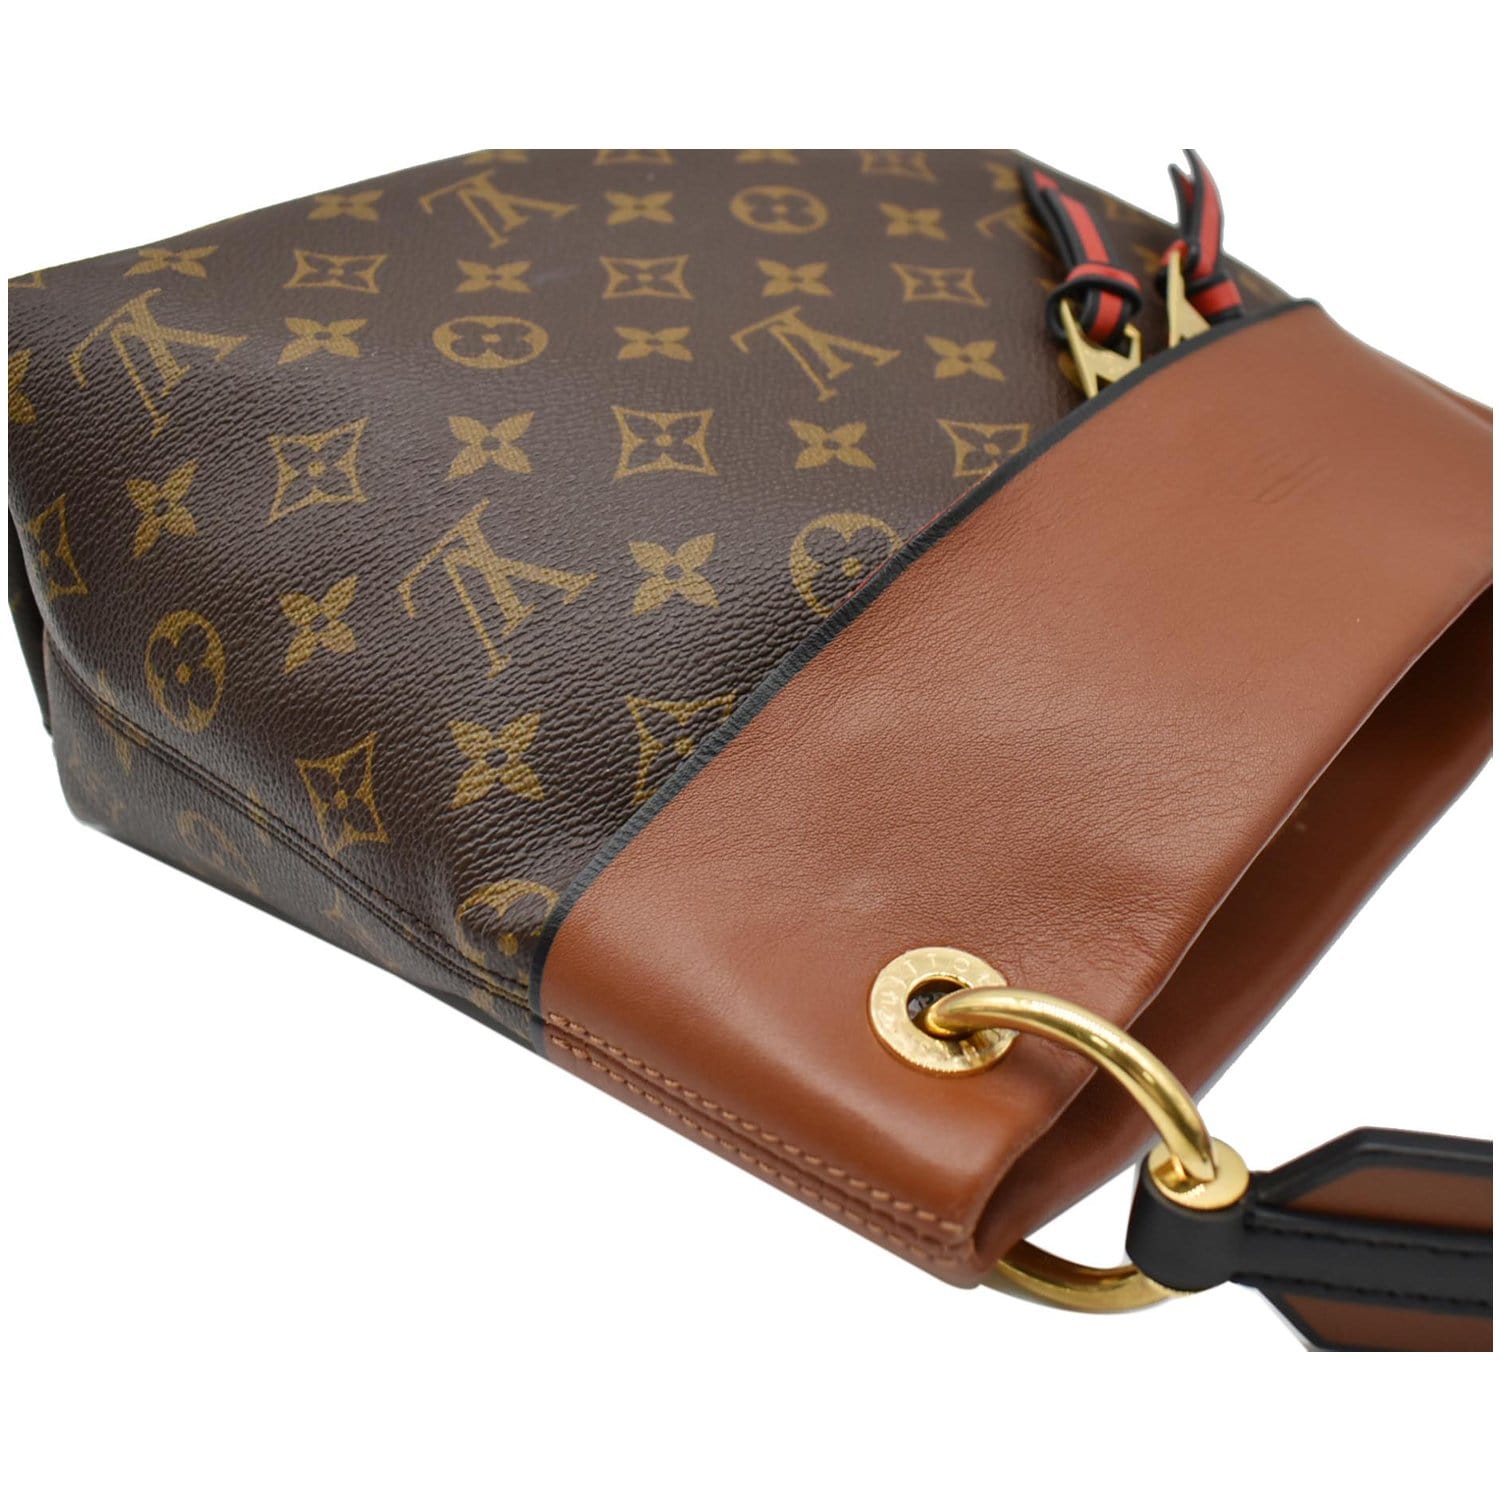 Louis Vuitton Tuileries Bag luxury vintage bags for sale